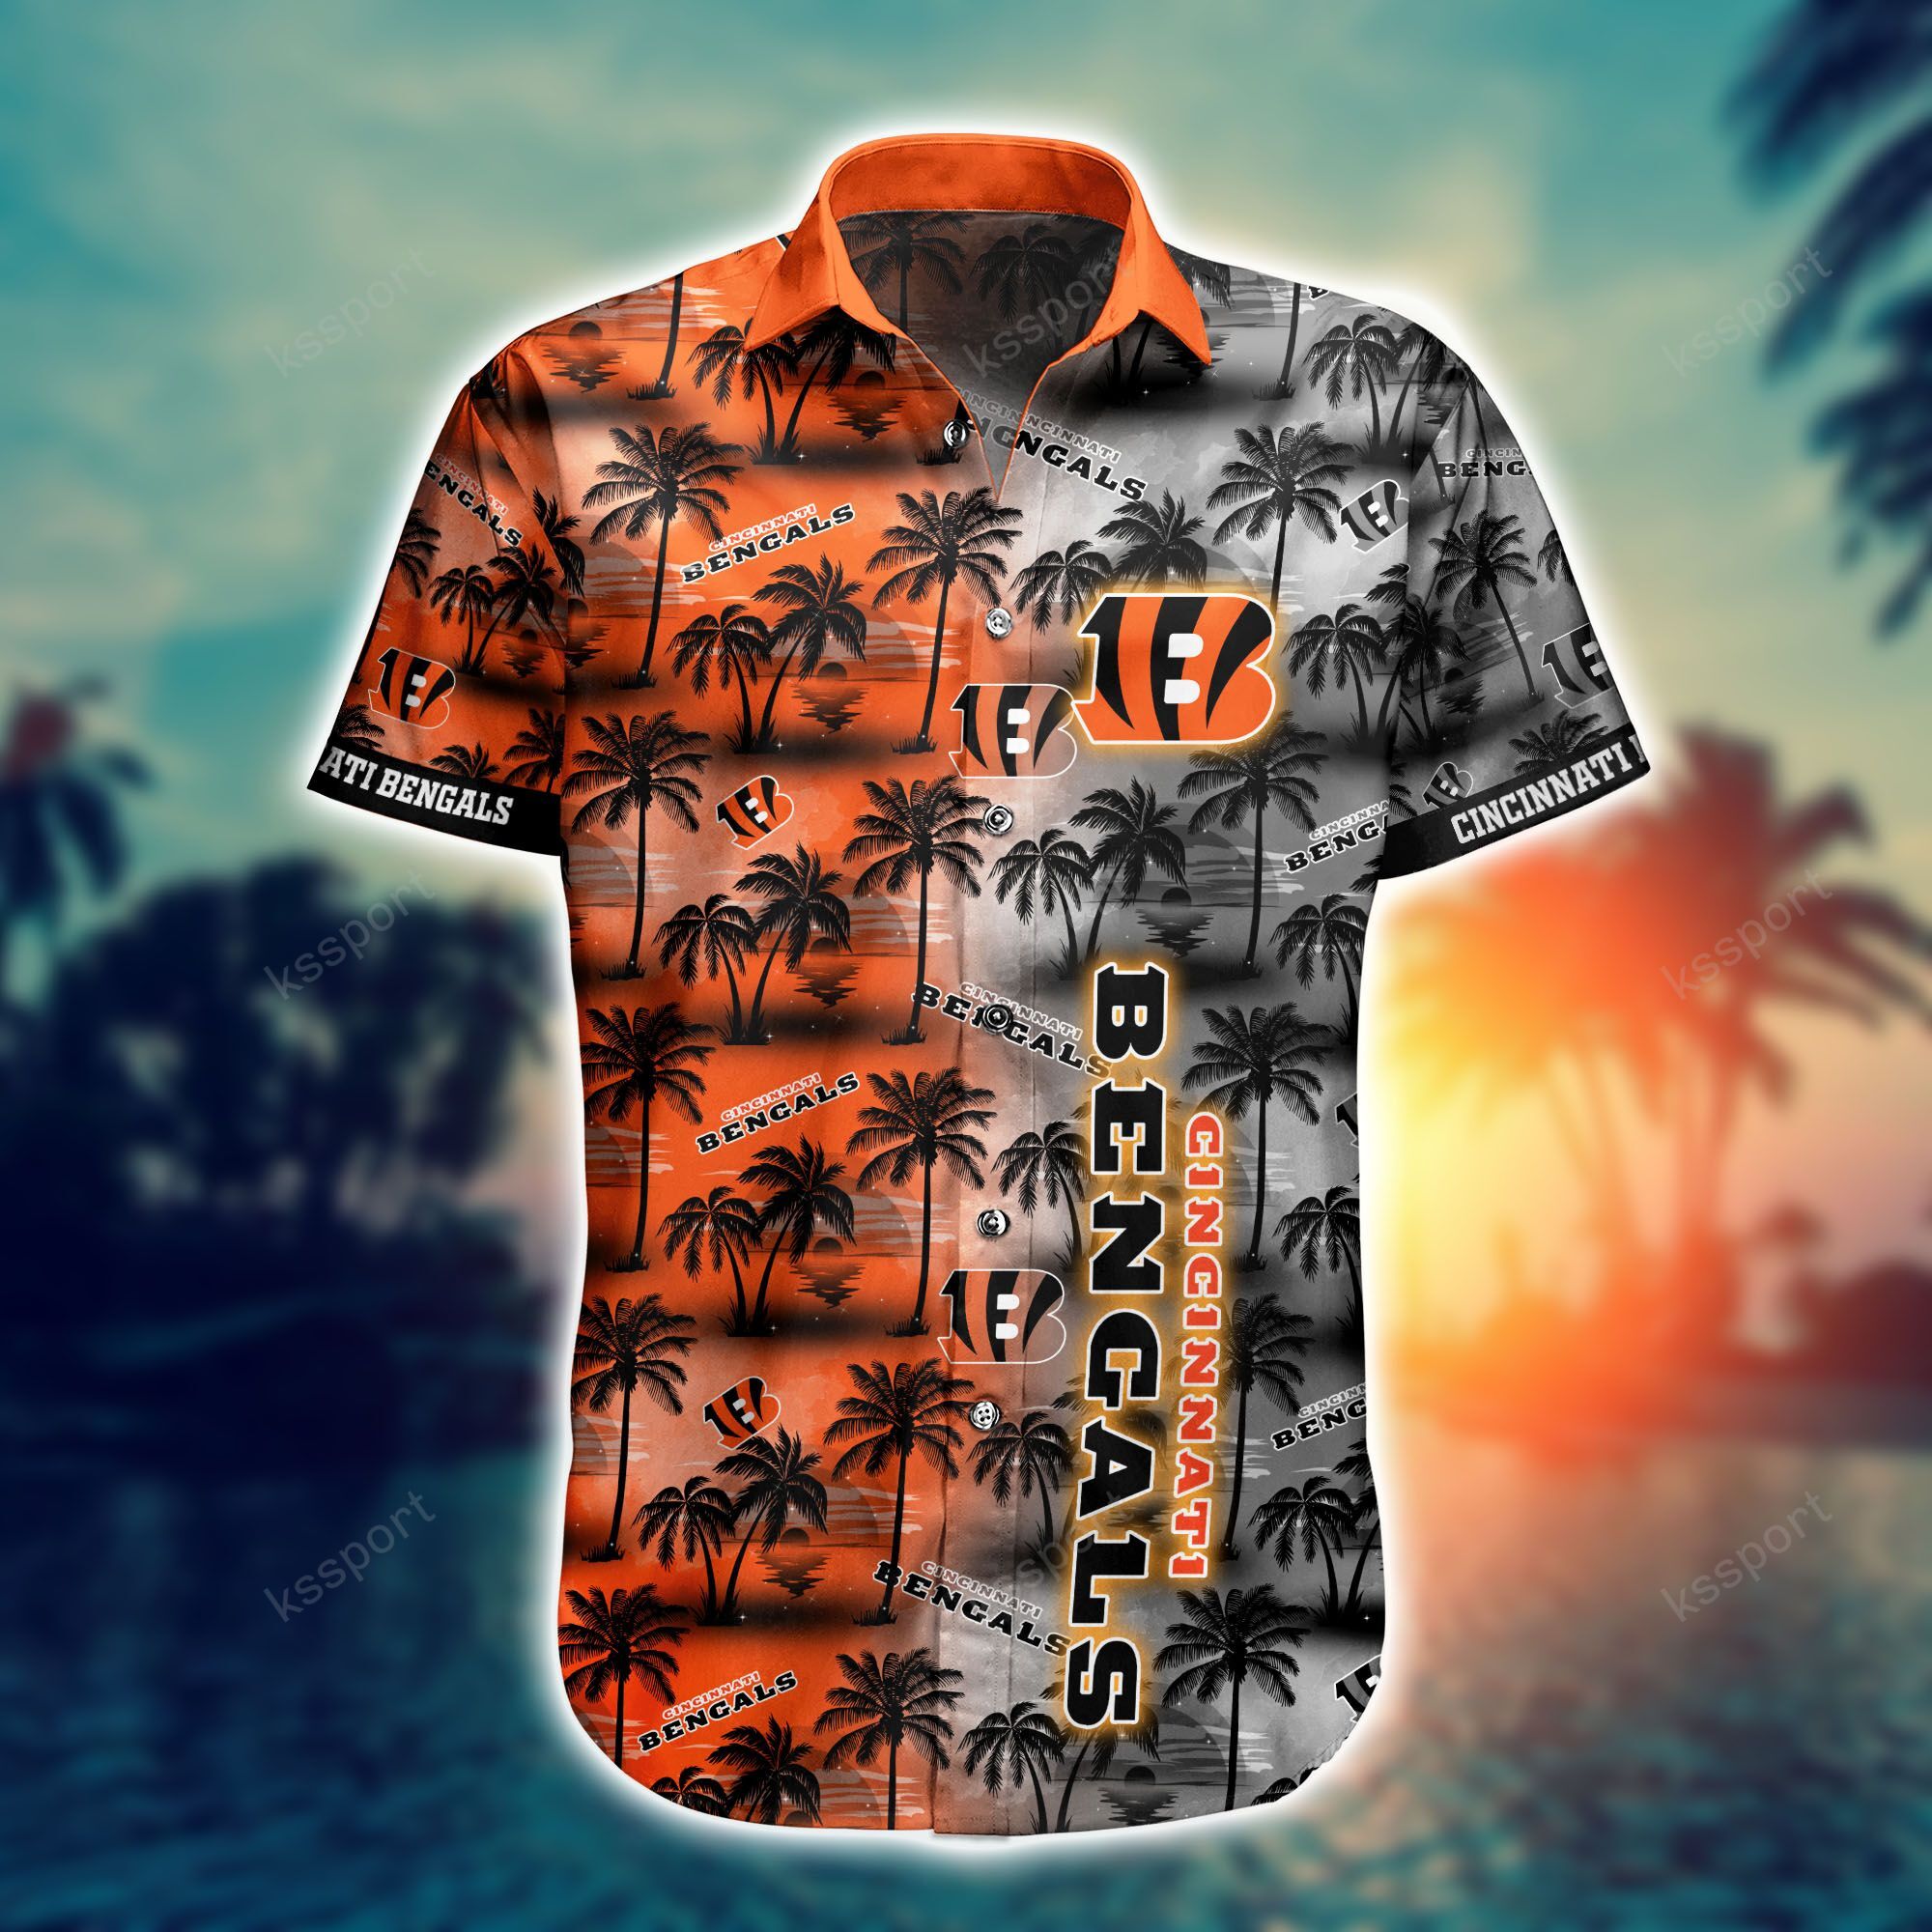 Hawaiian shirt and shorts is a great way to look stylish at a beach party 135